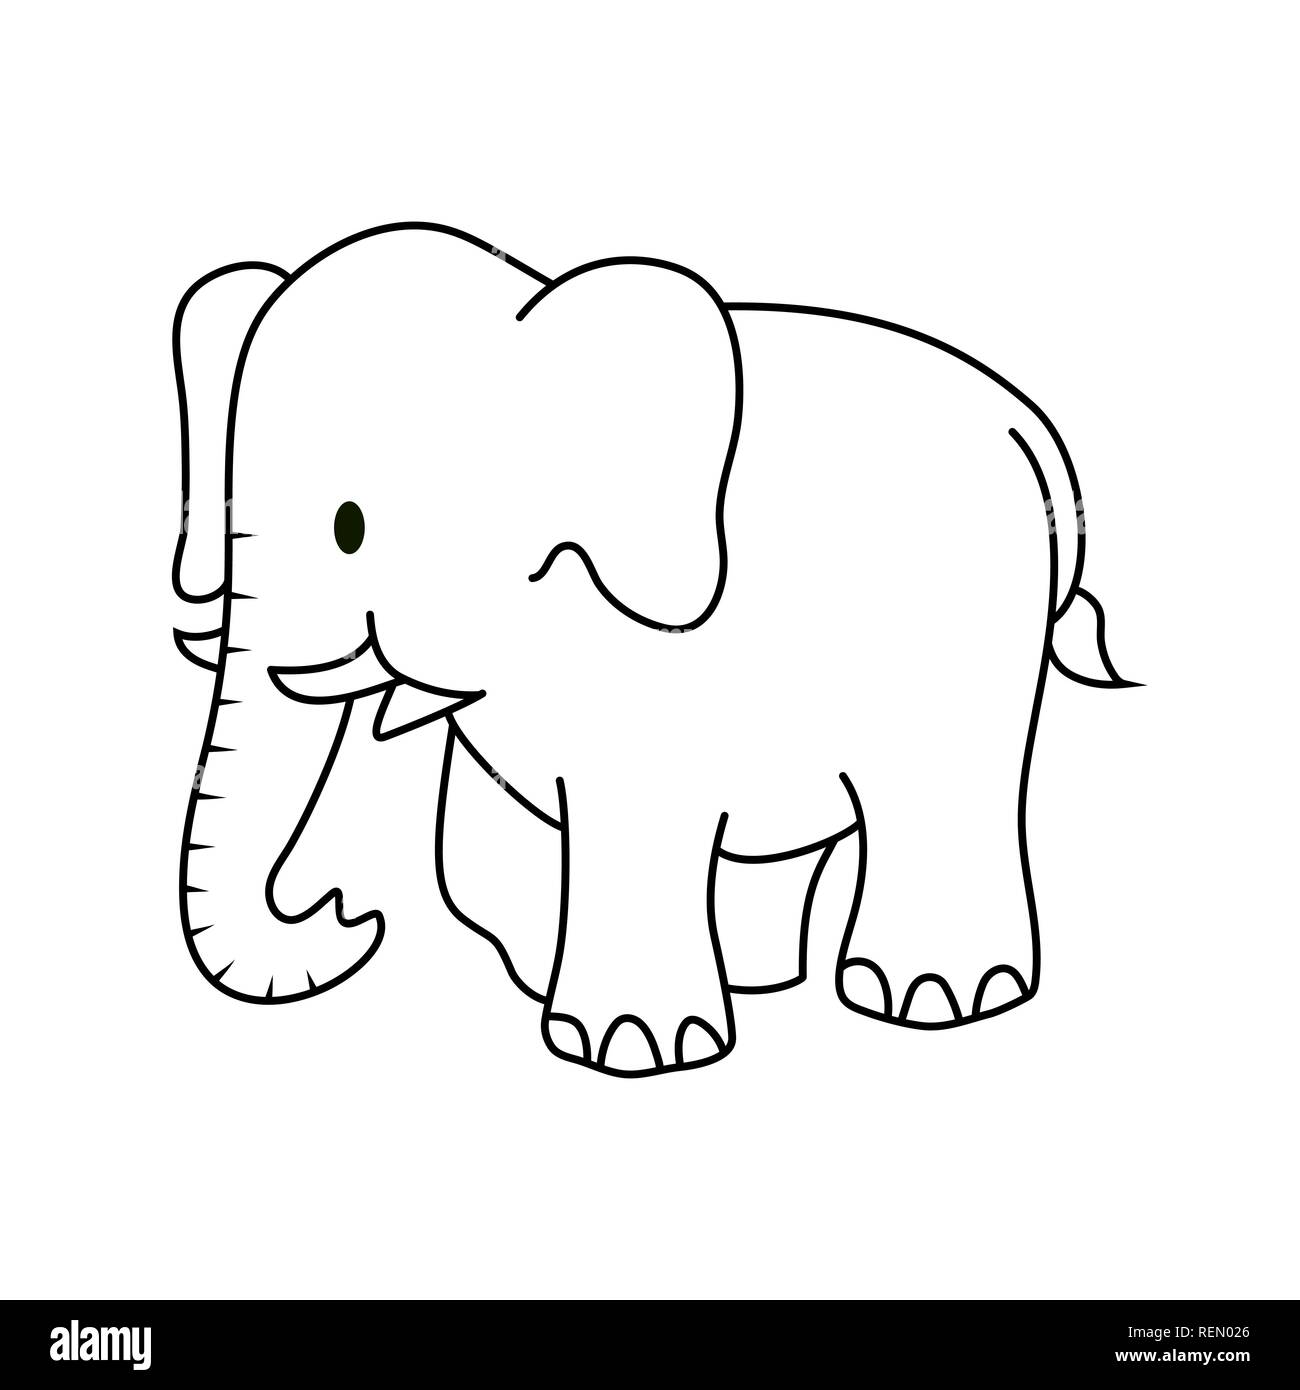 outline of elephant